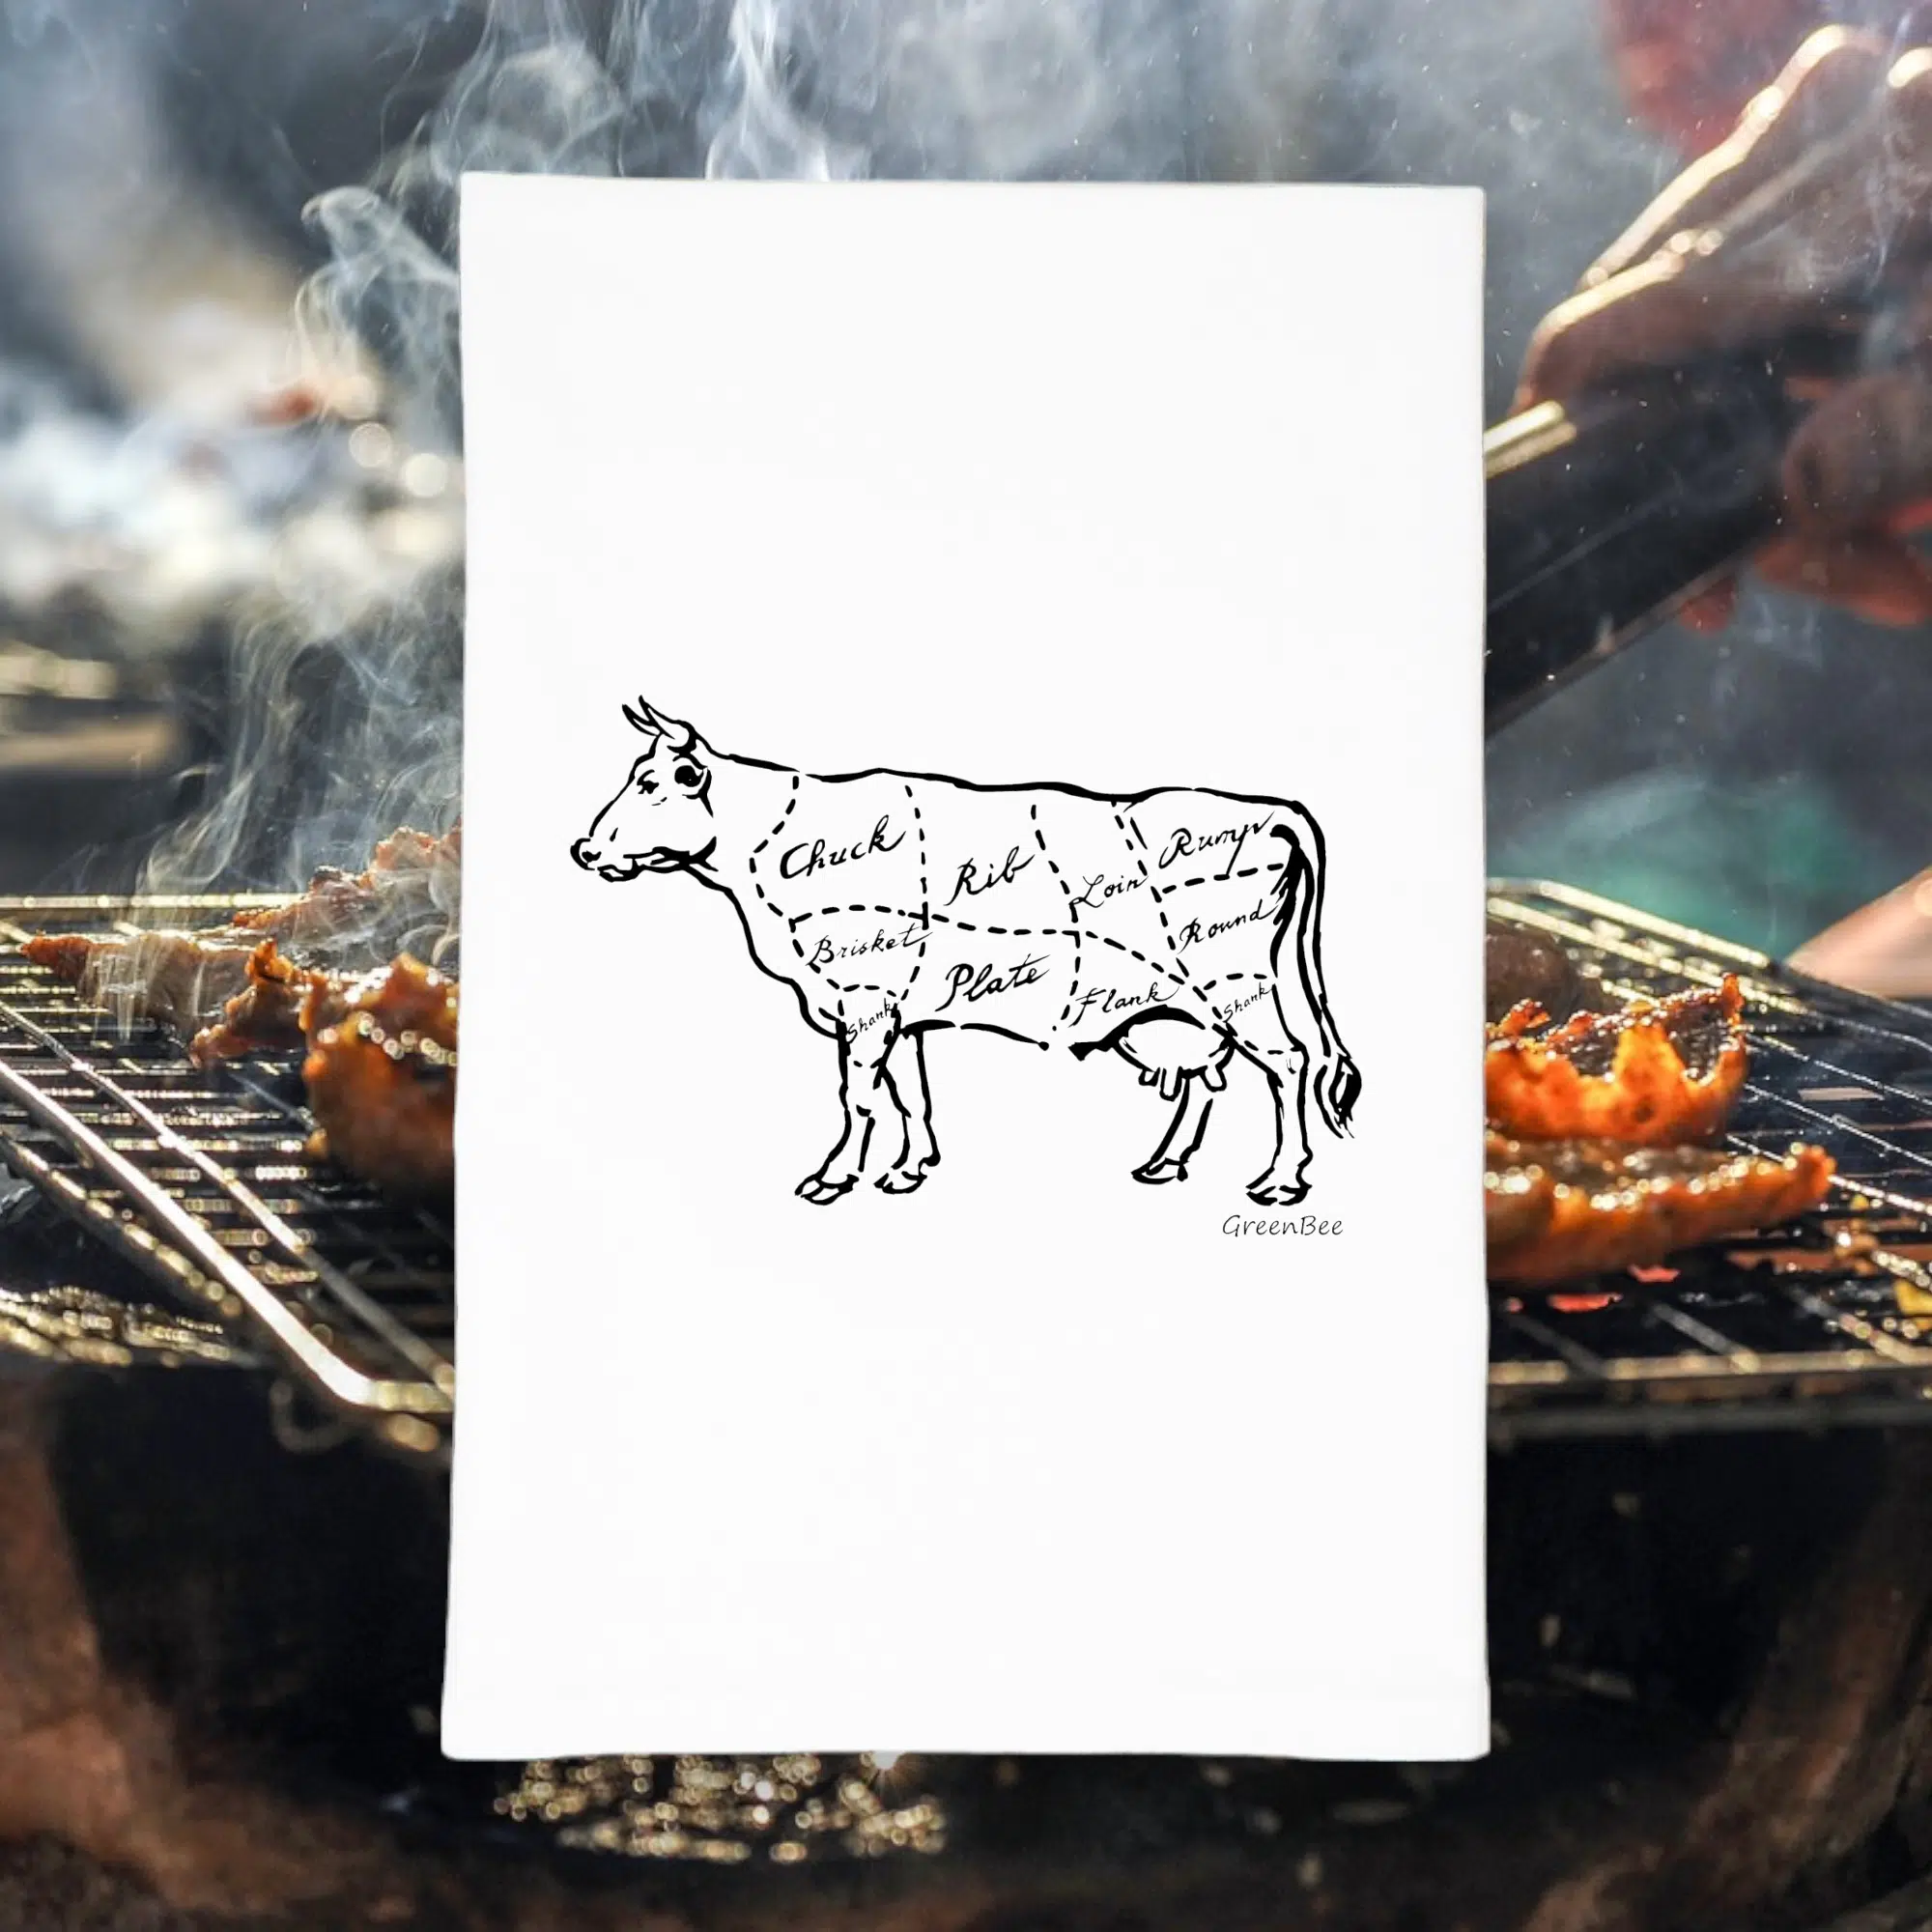 beef butcher cuts image on kitchen towel, tea towel